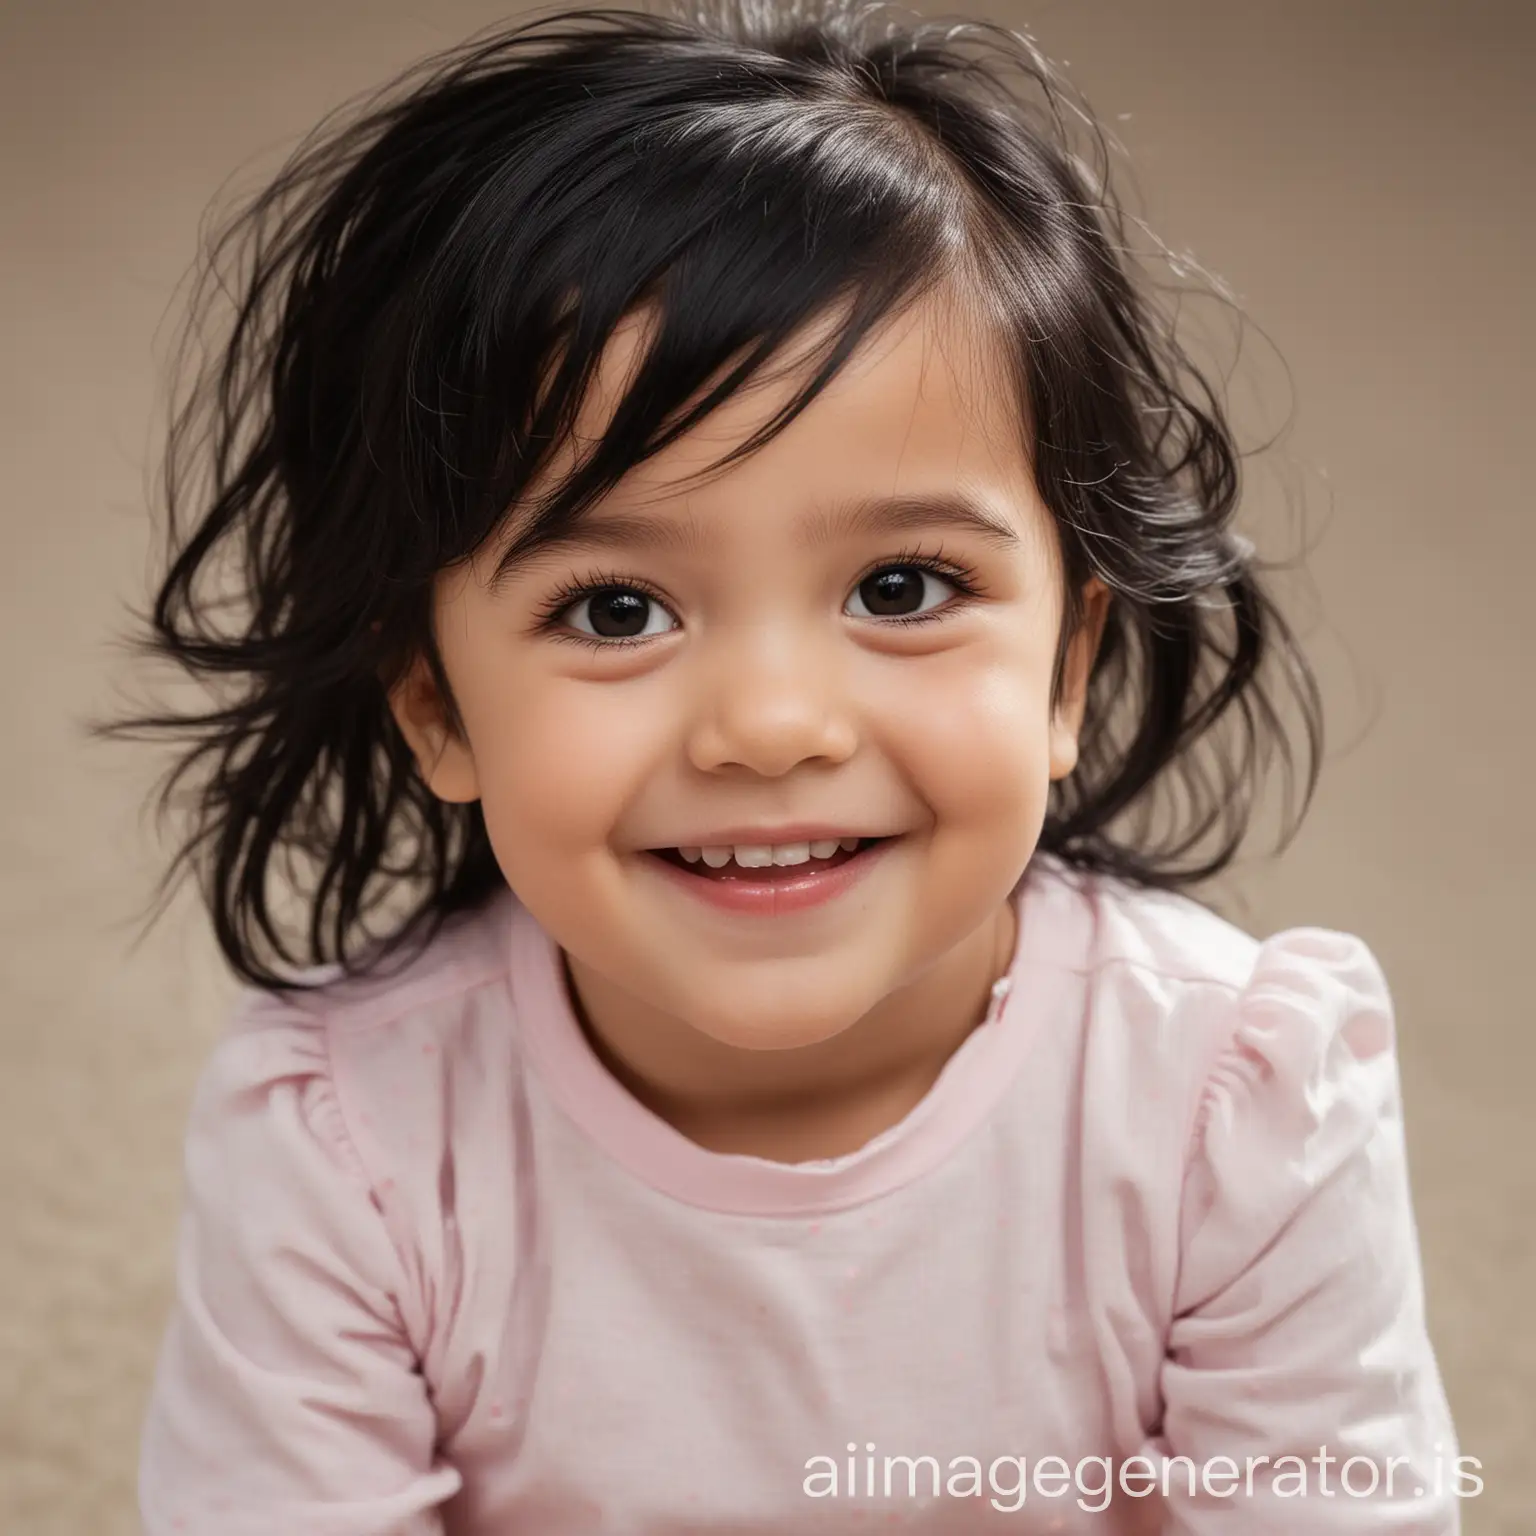 Smiling-Portrait-of-Adorable-BlackHaired-Toddler-Girl